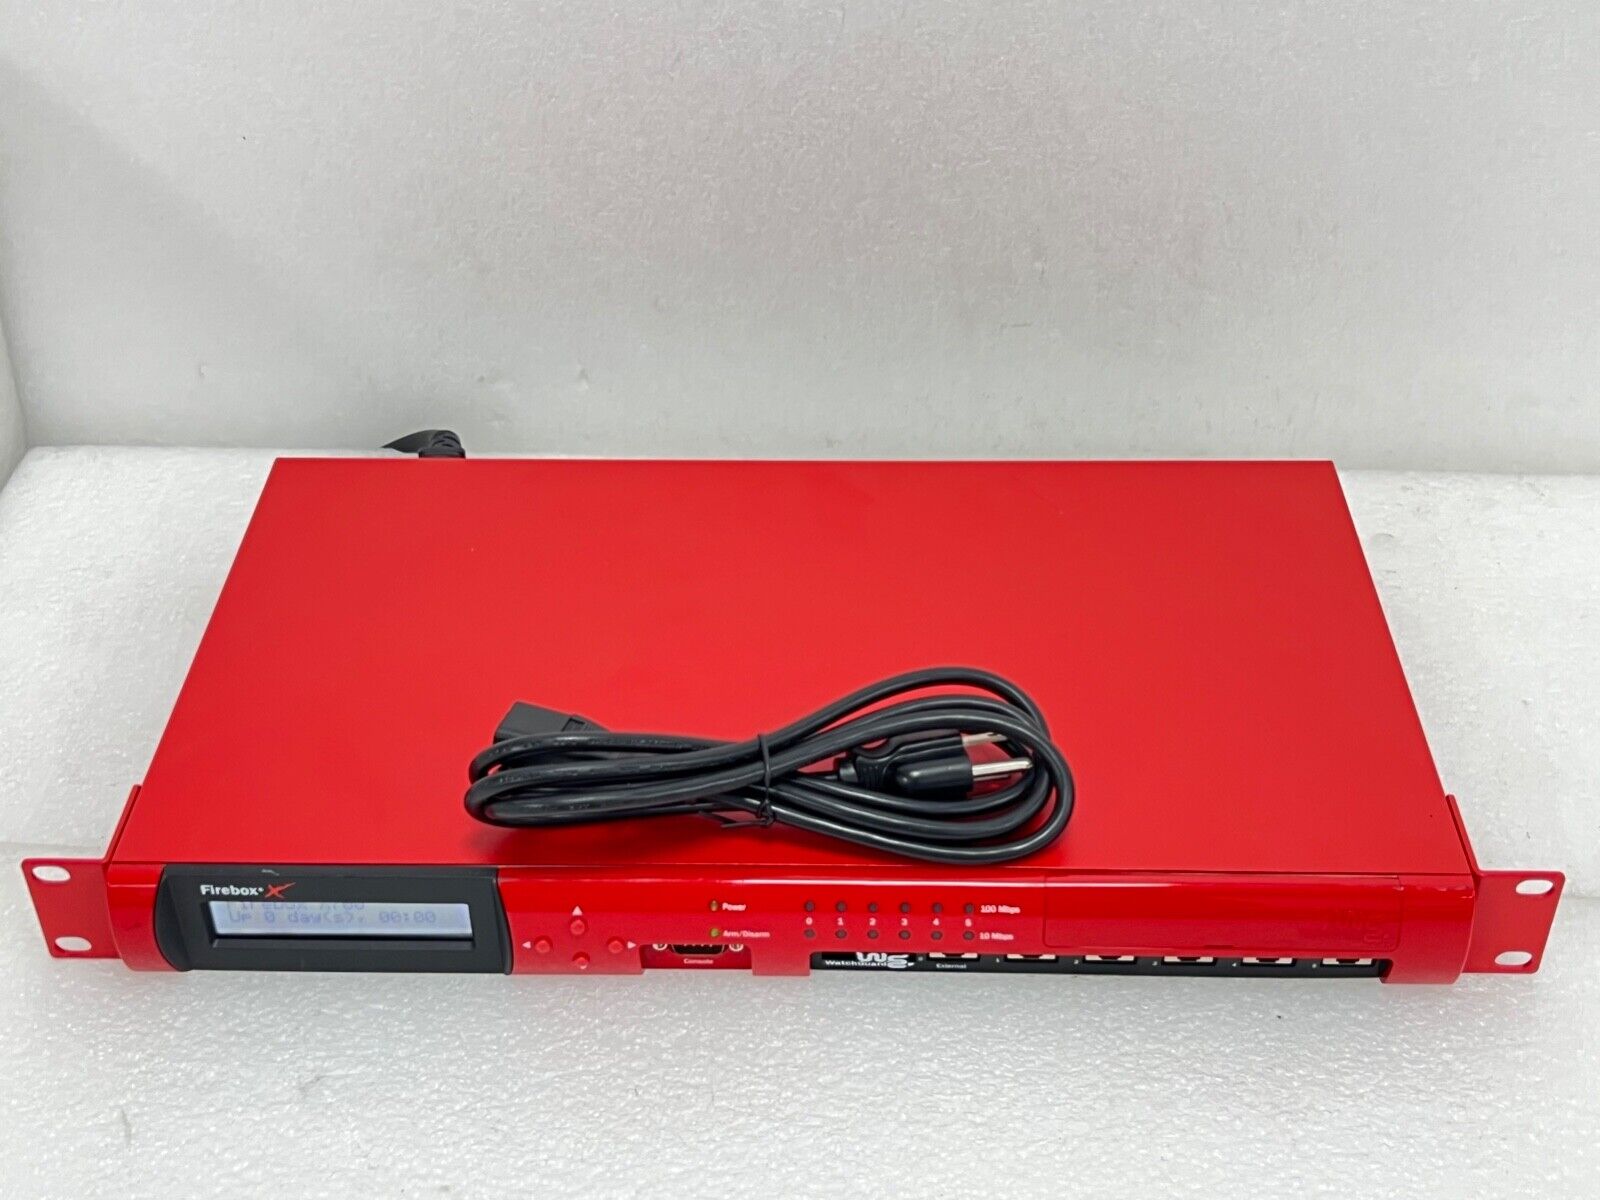 Watchguard R6264S / Firebox X700 Network Firewall Security Console - RED